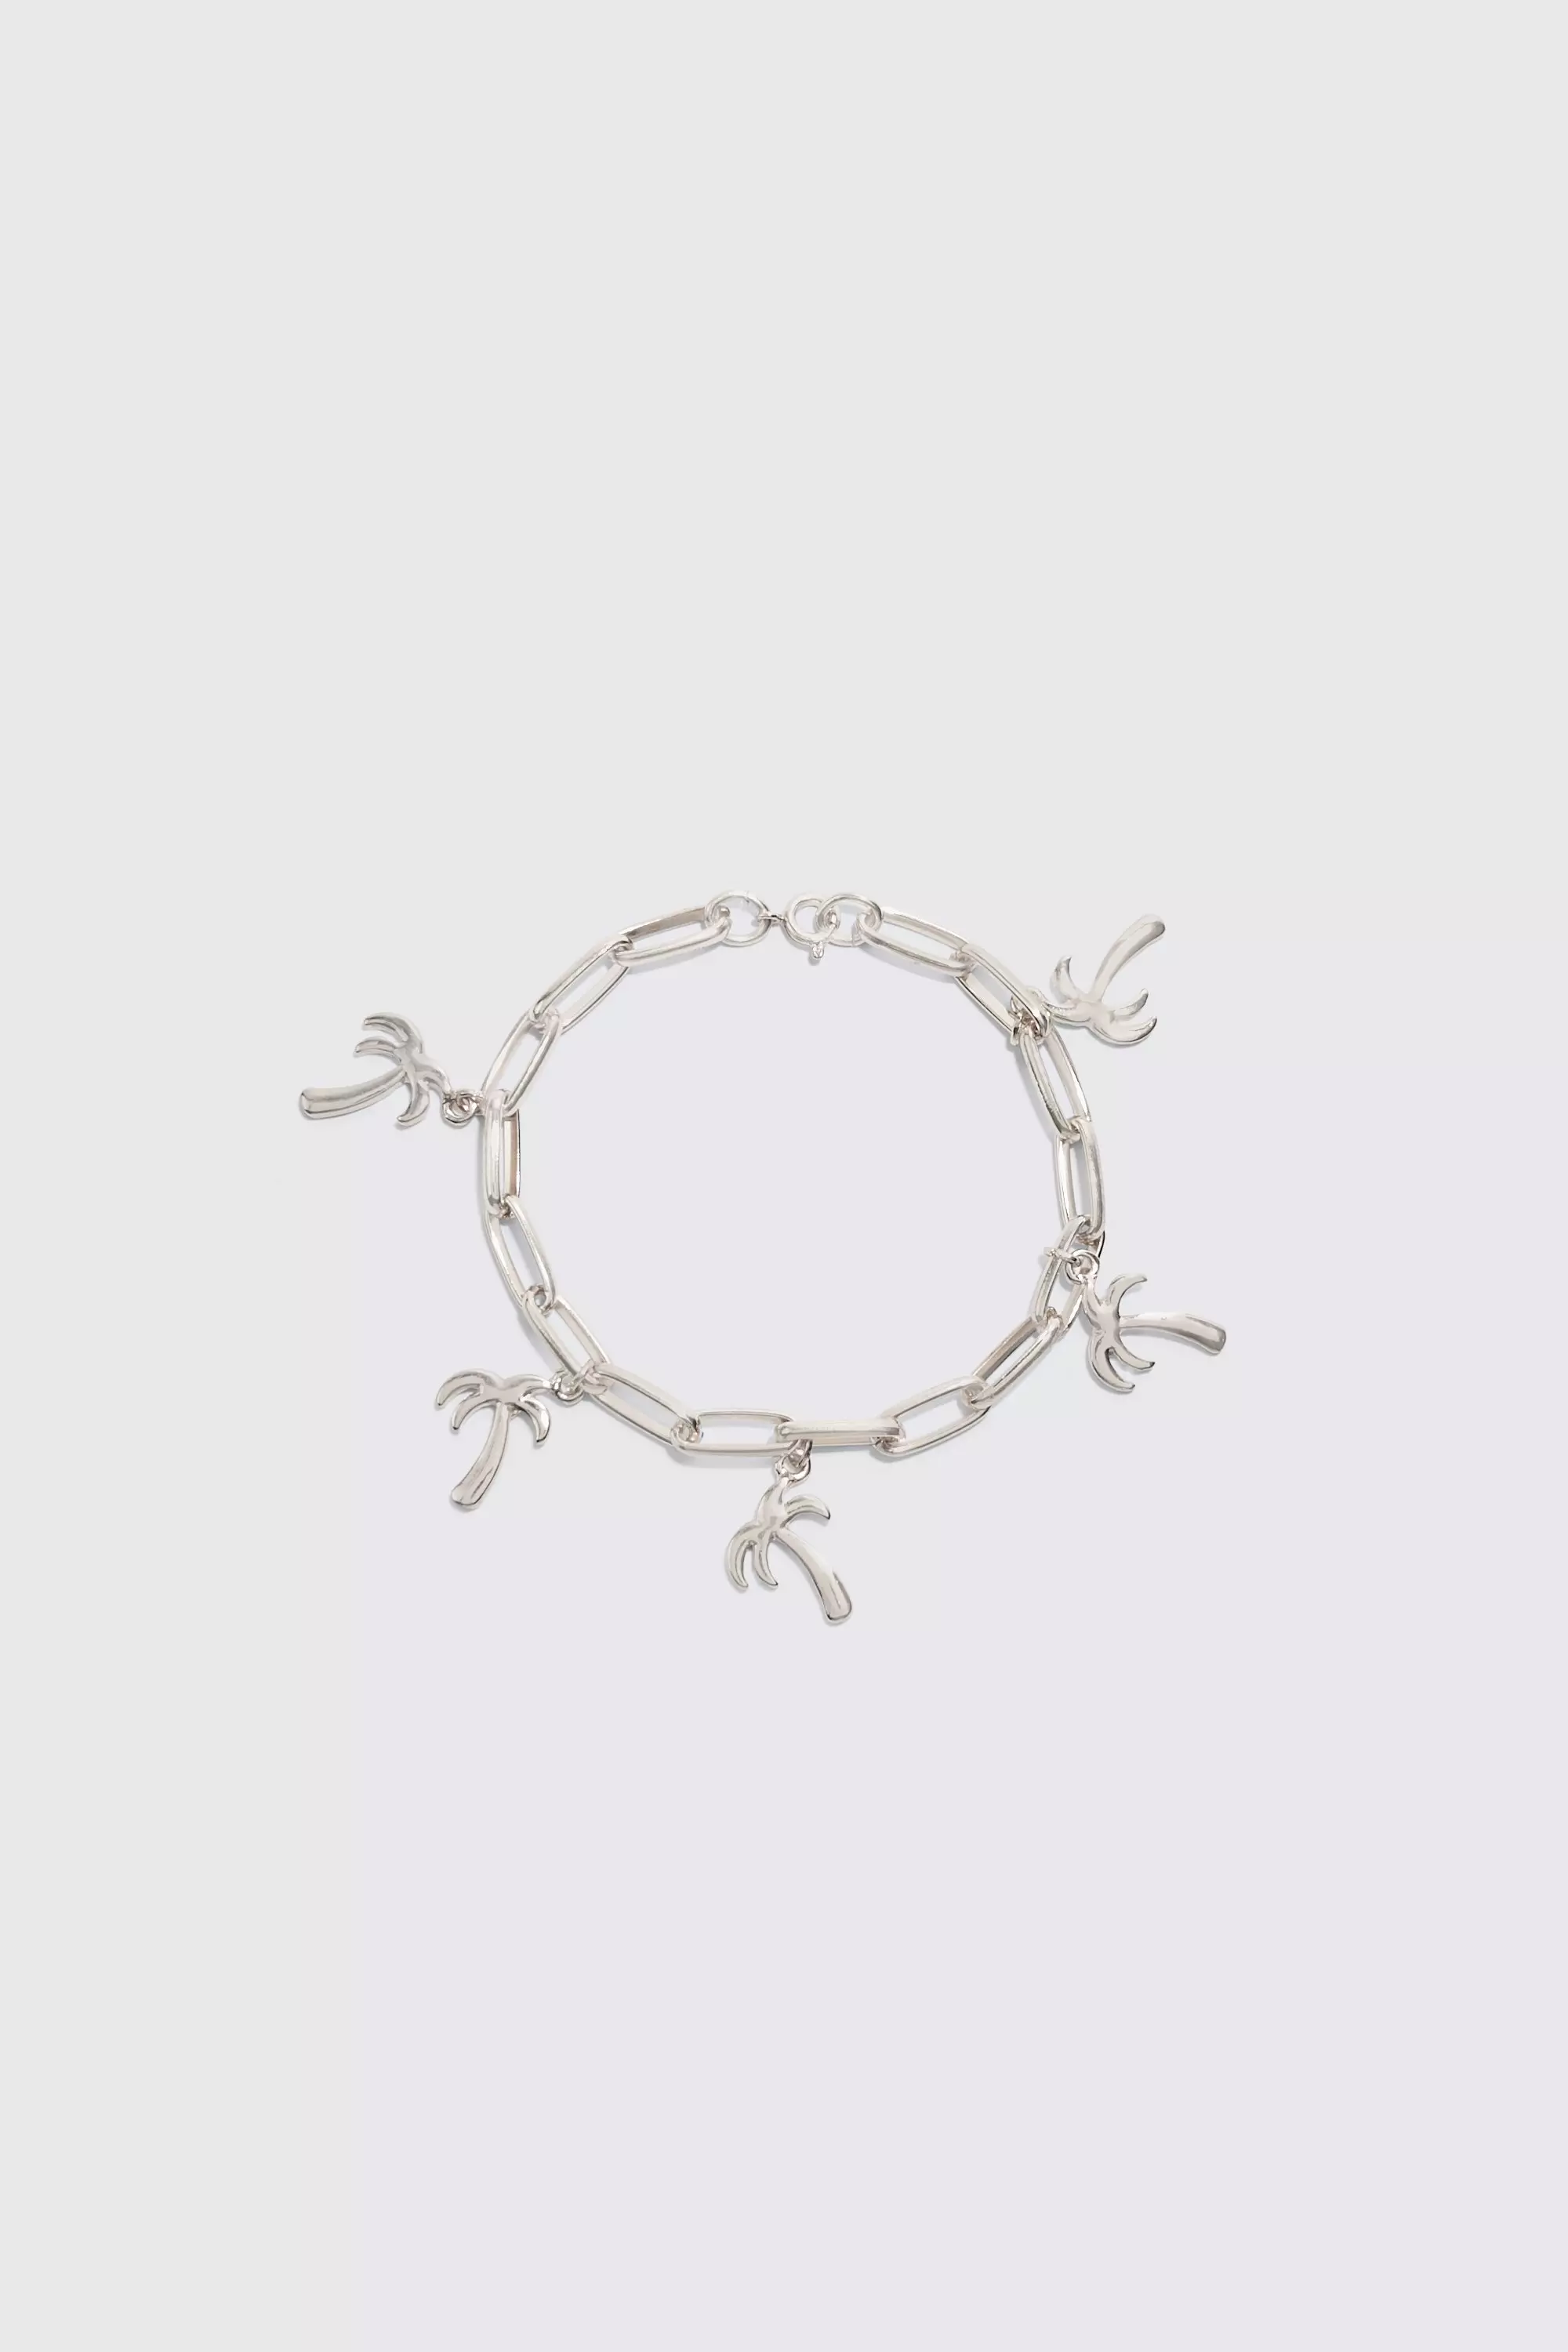 Palm Tree Charm Bracelet Silver